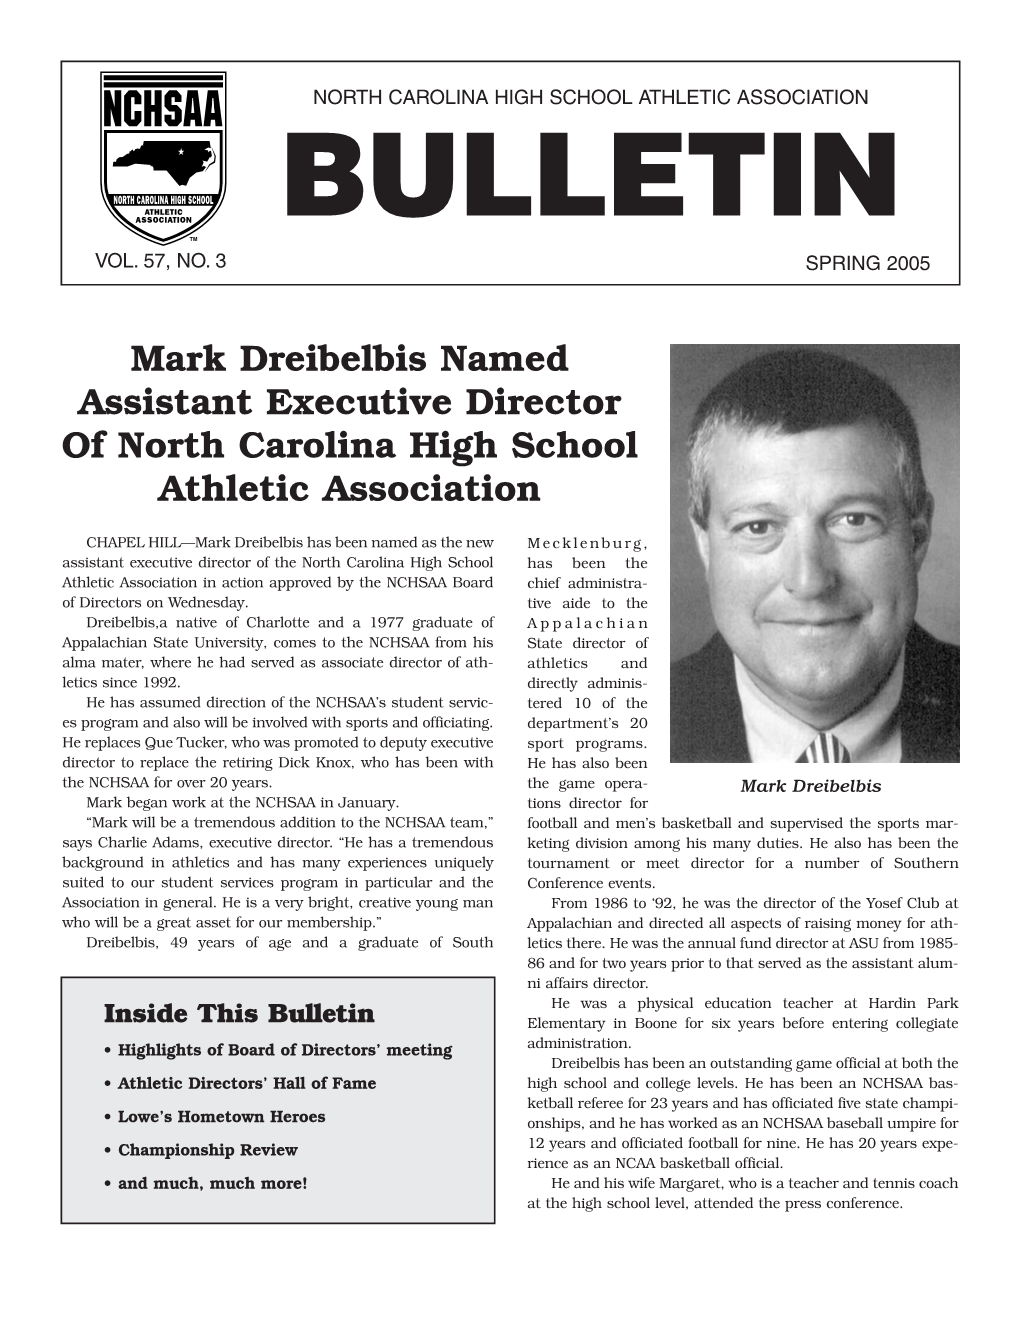 Mark Dreibelbis Named Assistant Executive Director of North Carolina High School Athletic Association